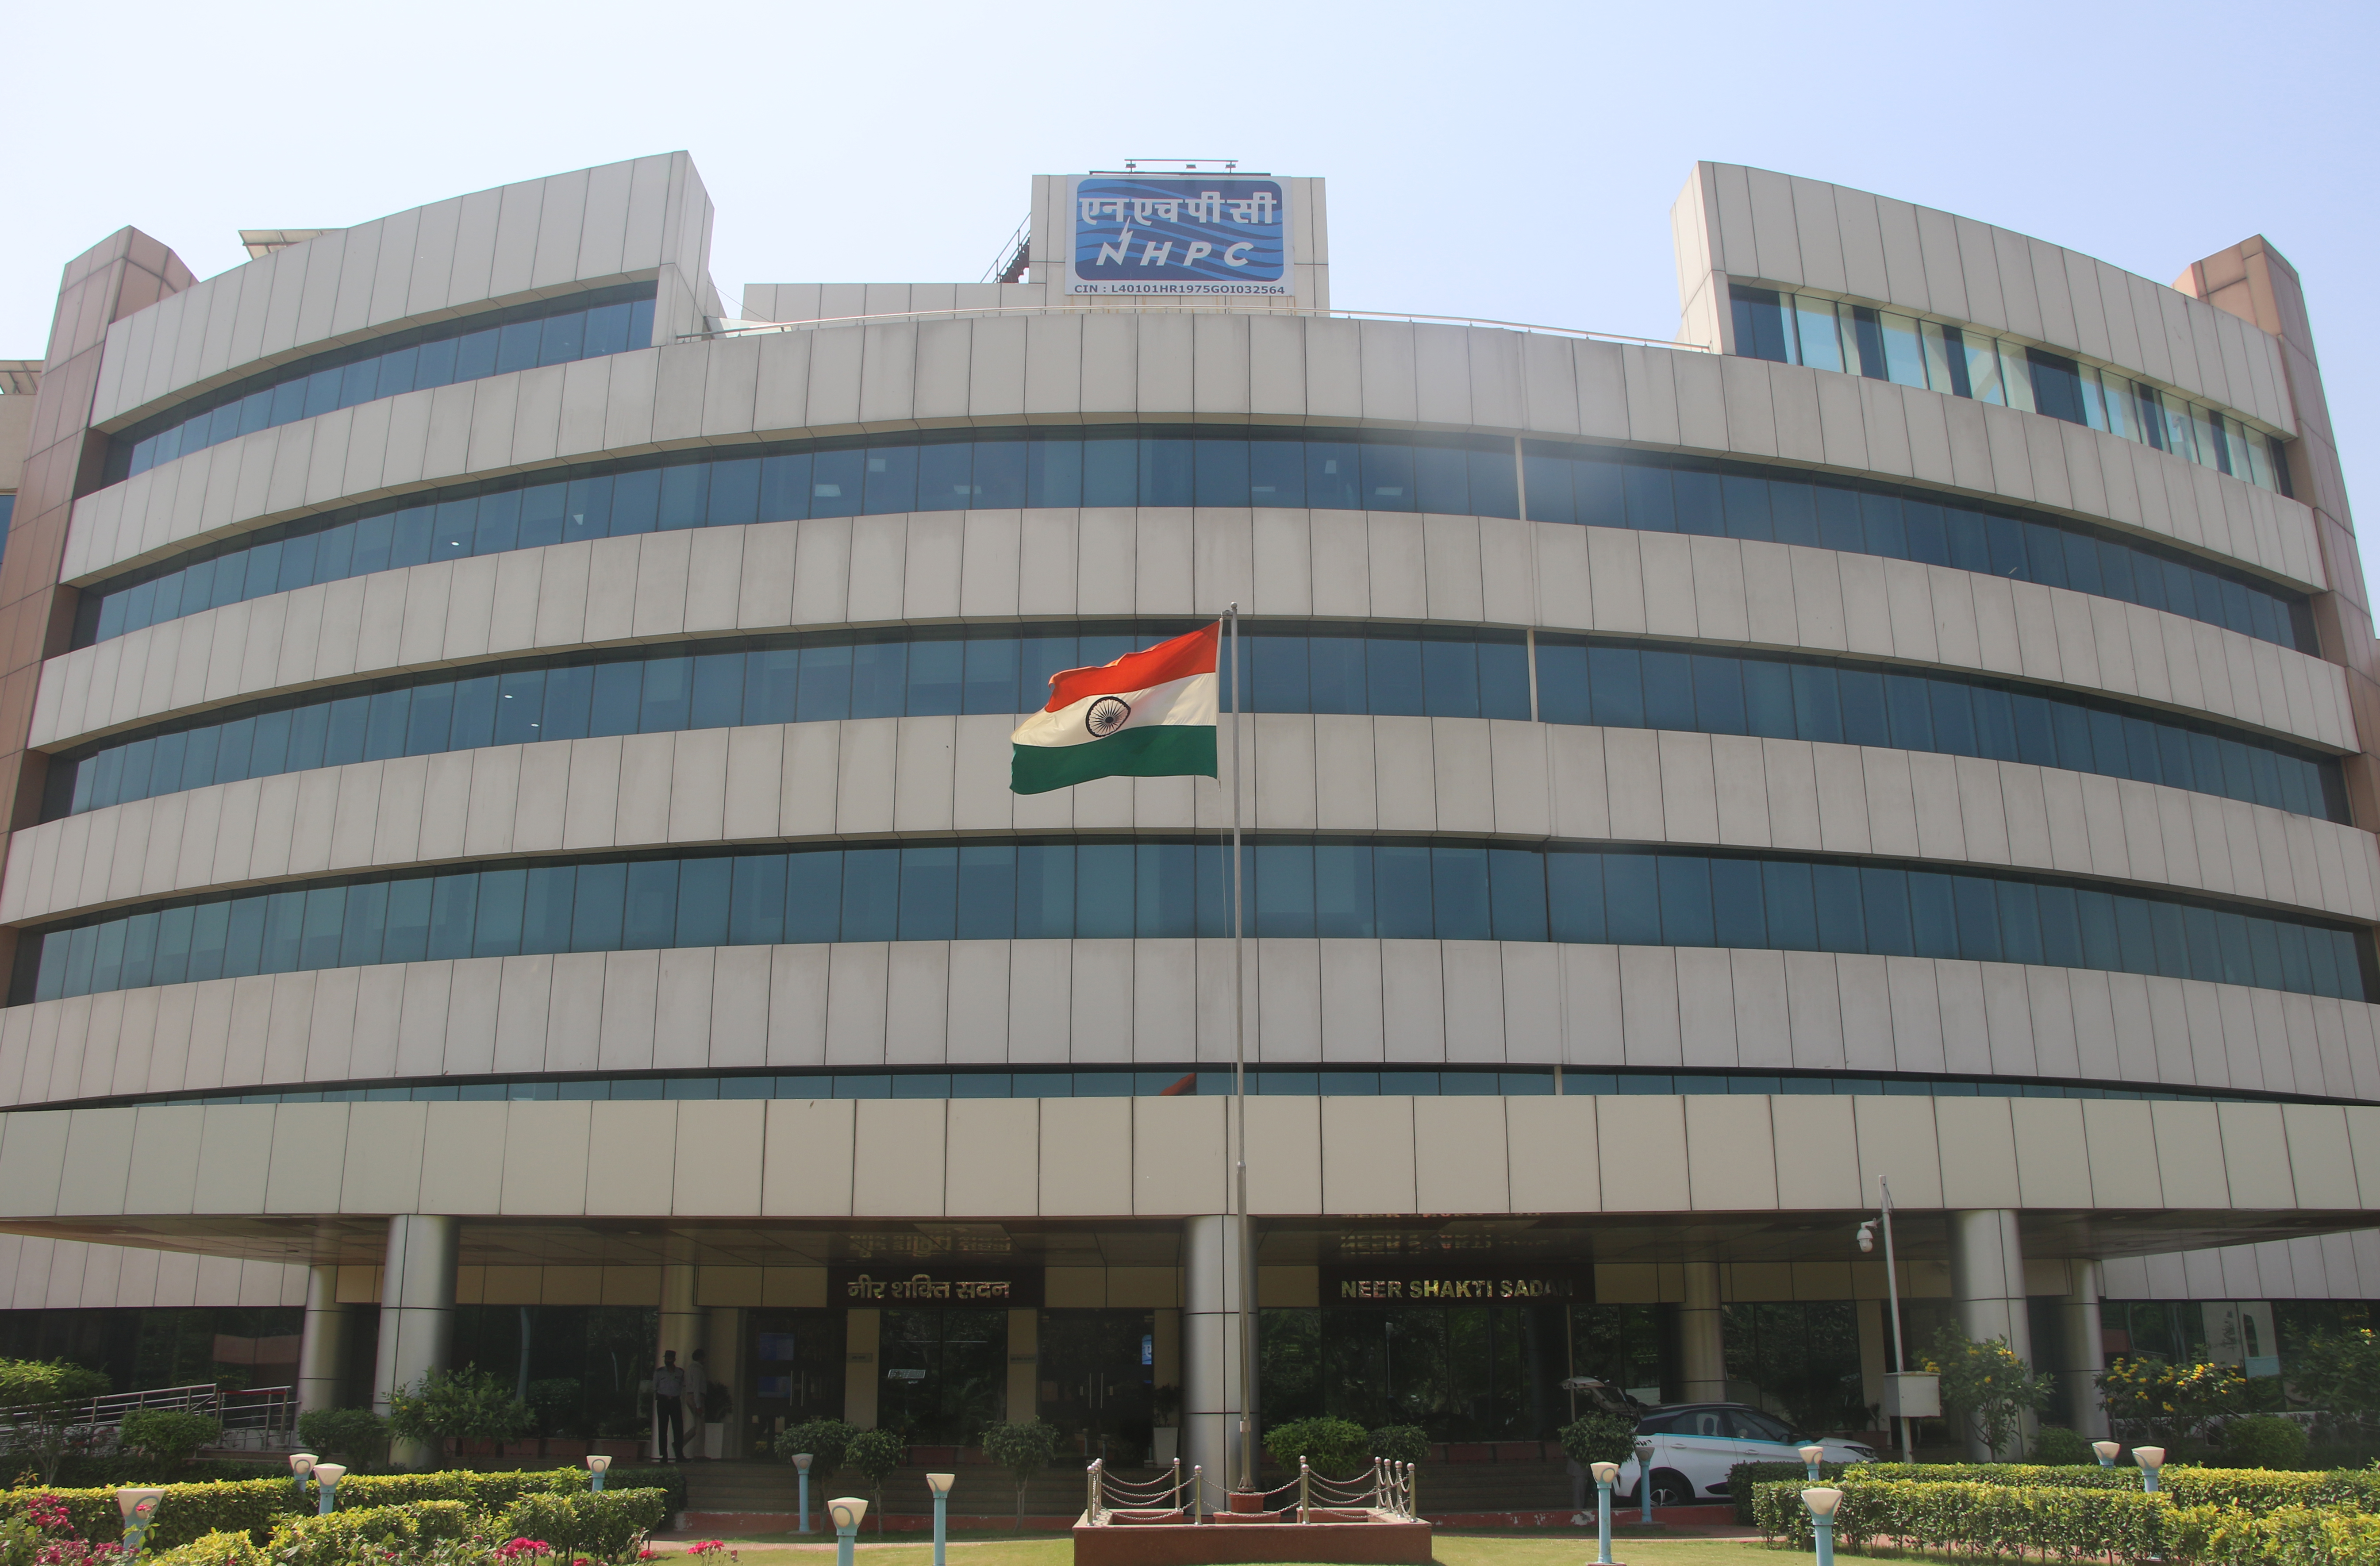 NHPC Office Complex at Faridabad (Haryana)